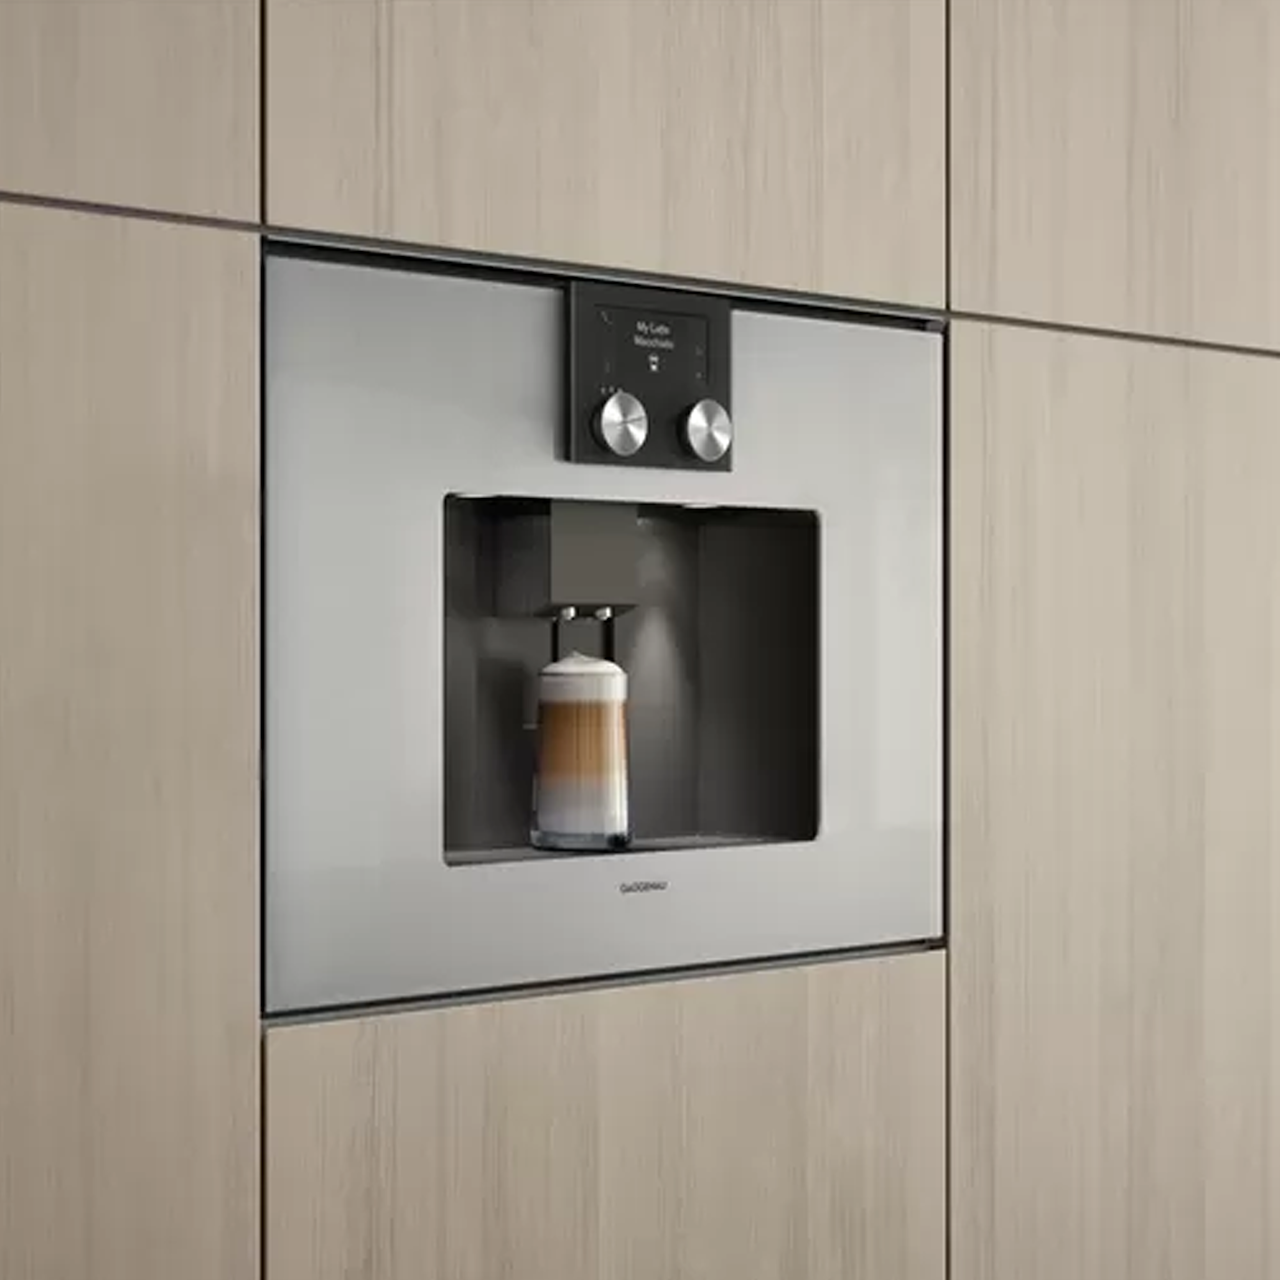 Espresso machine S200 - Metallic